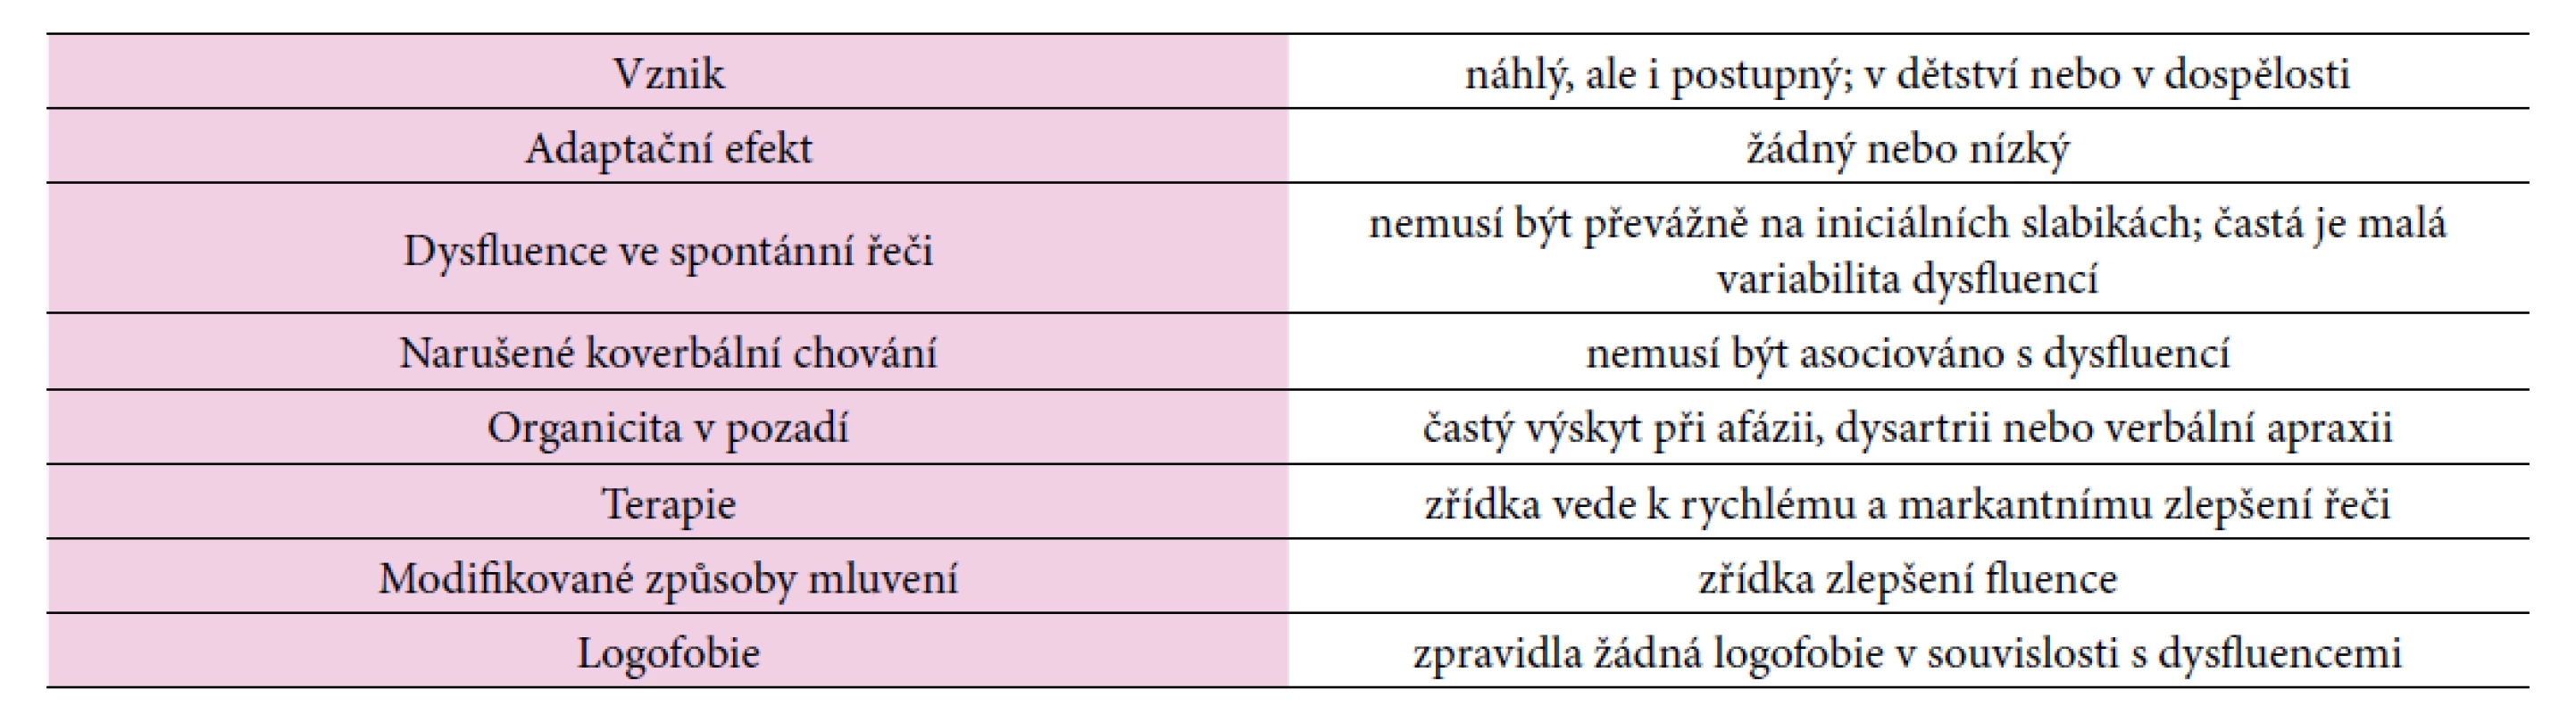 Neurogenní dysfluence – shrnutí (Lechta in Cséfalvay, Lechta, 2013)